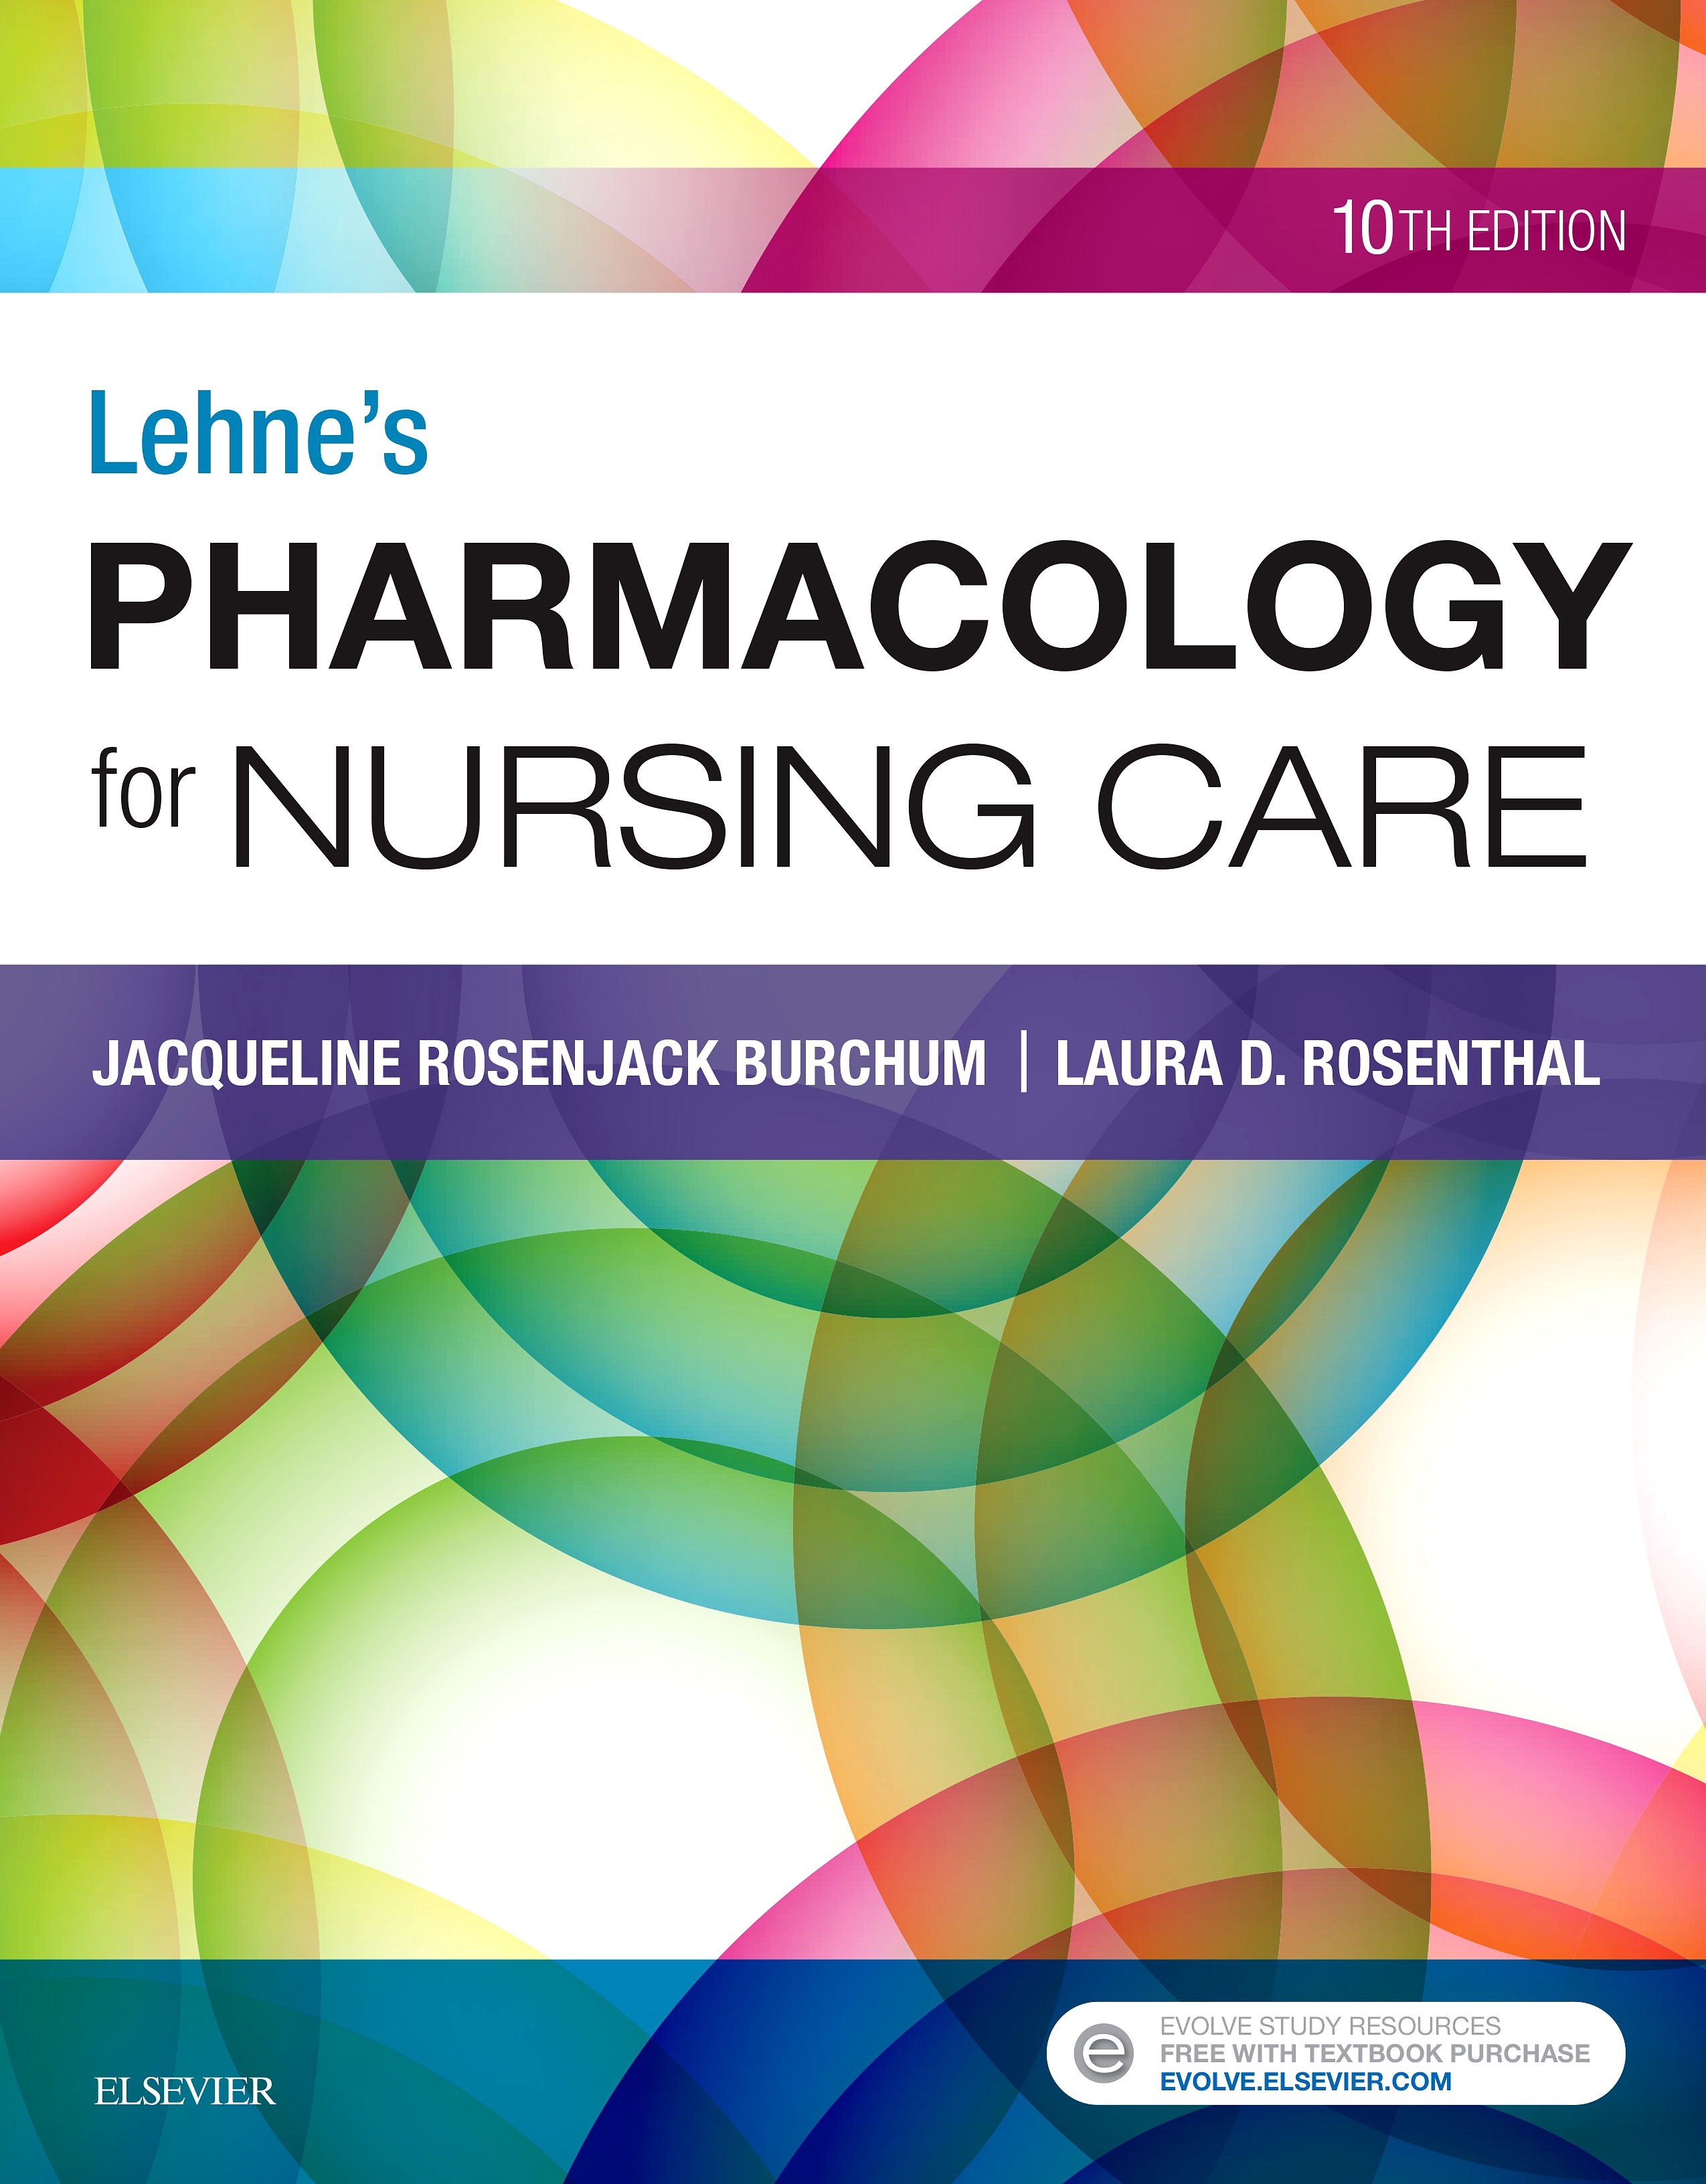 Evolve Resources for Lehne's Pharmacology for Nursing Care, 10th